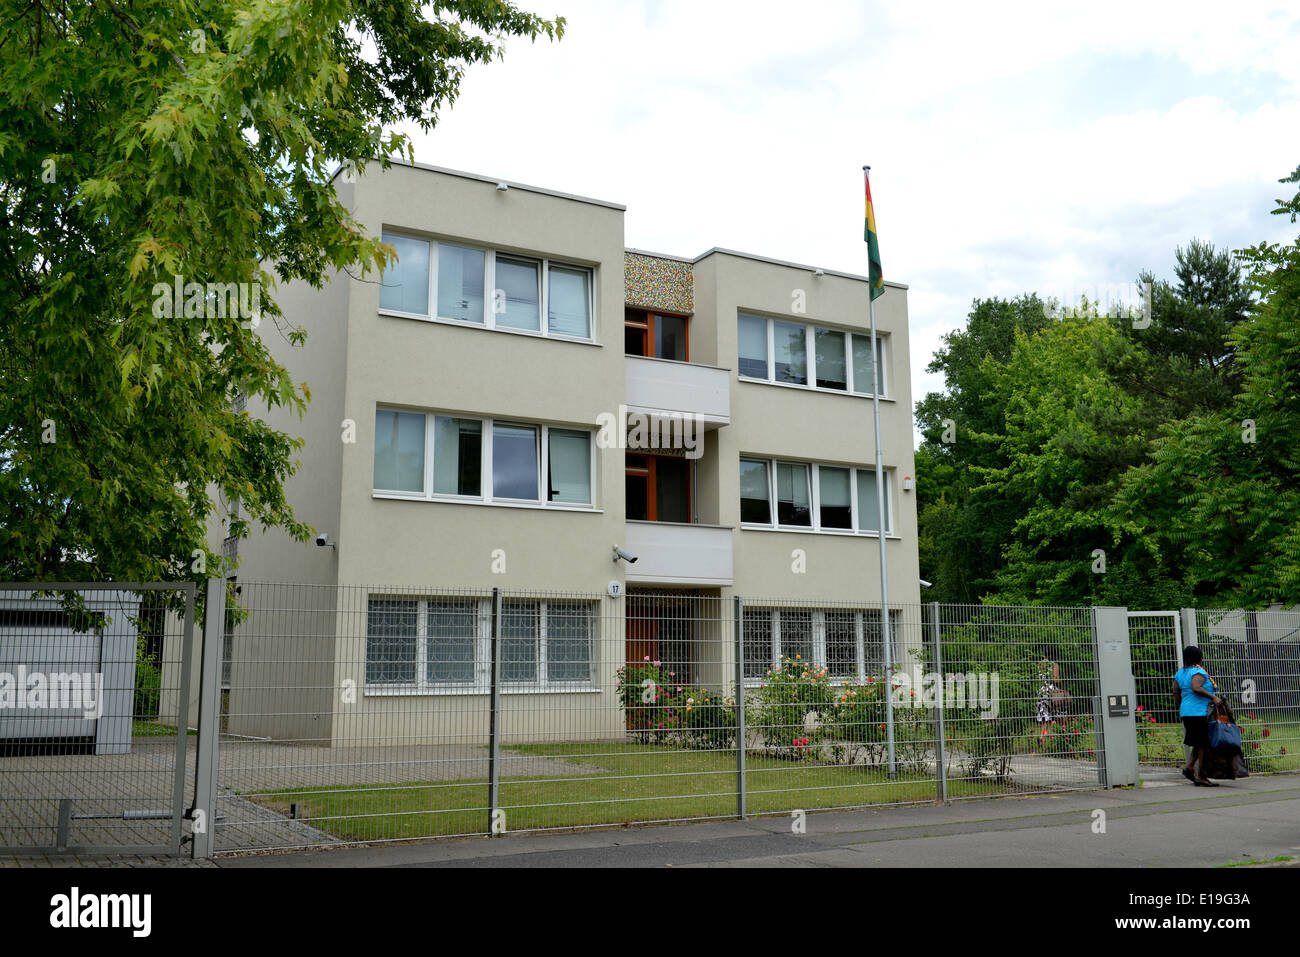 Botschaft Ghana, Stavangerstrasse, Pankow, Berlin, Deutschland Banque D'Images